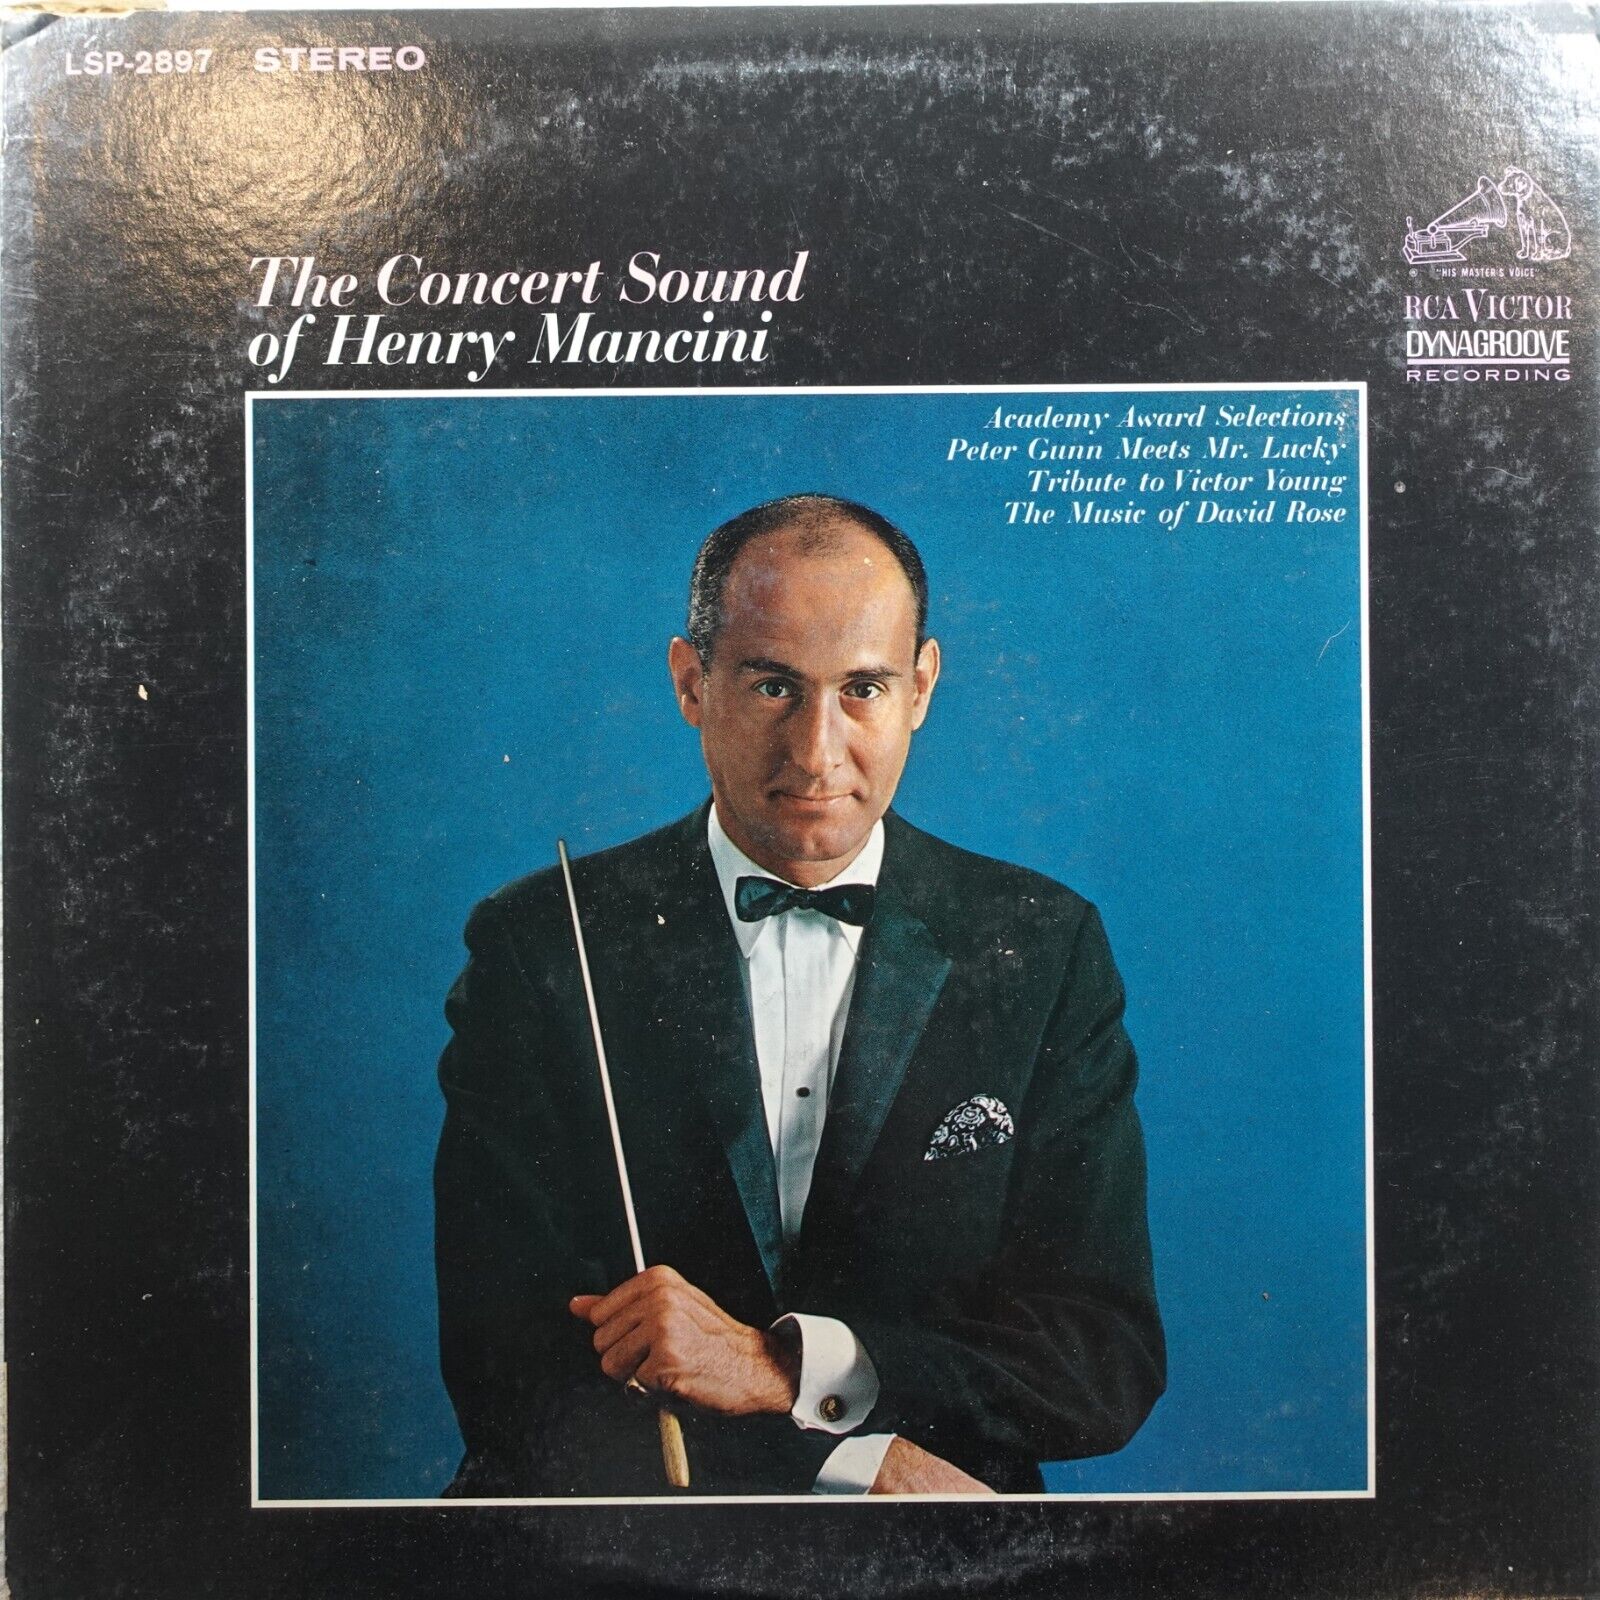 Henry Mancini The Concert Sound of Henry Mancini   Record Album Vinyl LP